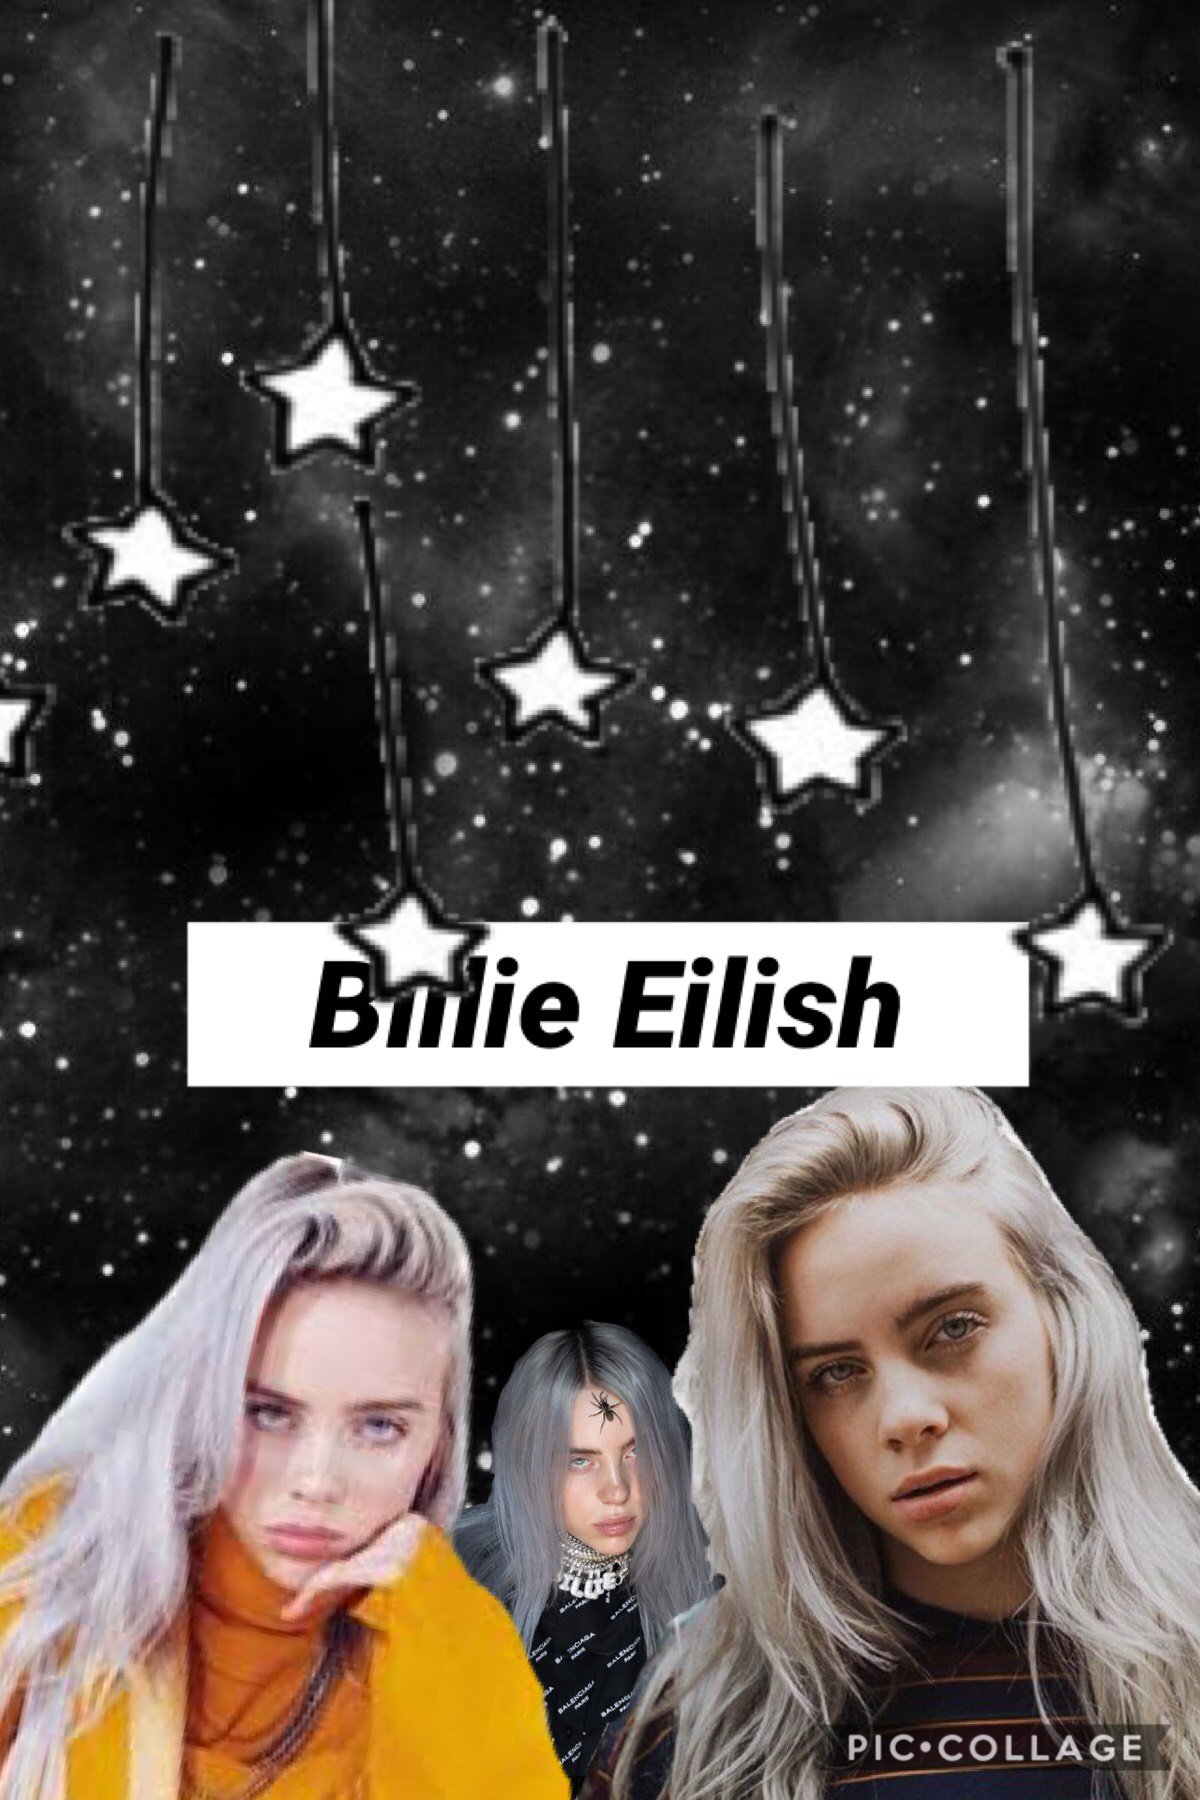 I love Billie Eilish she is my favorite!